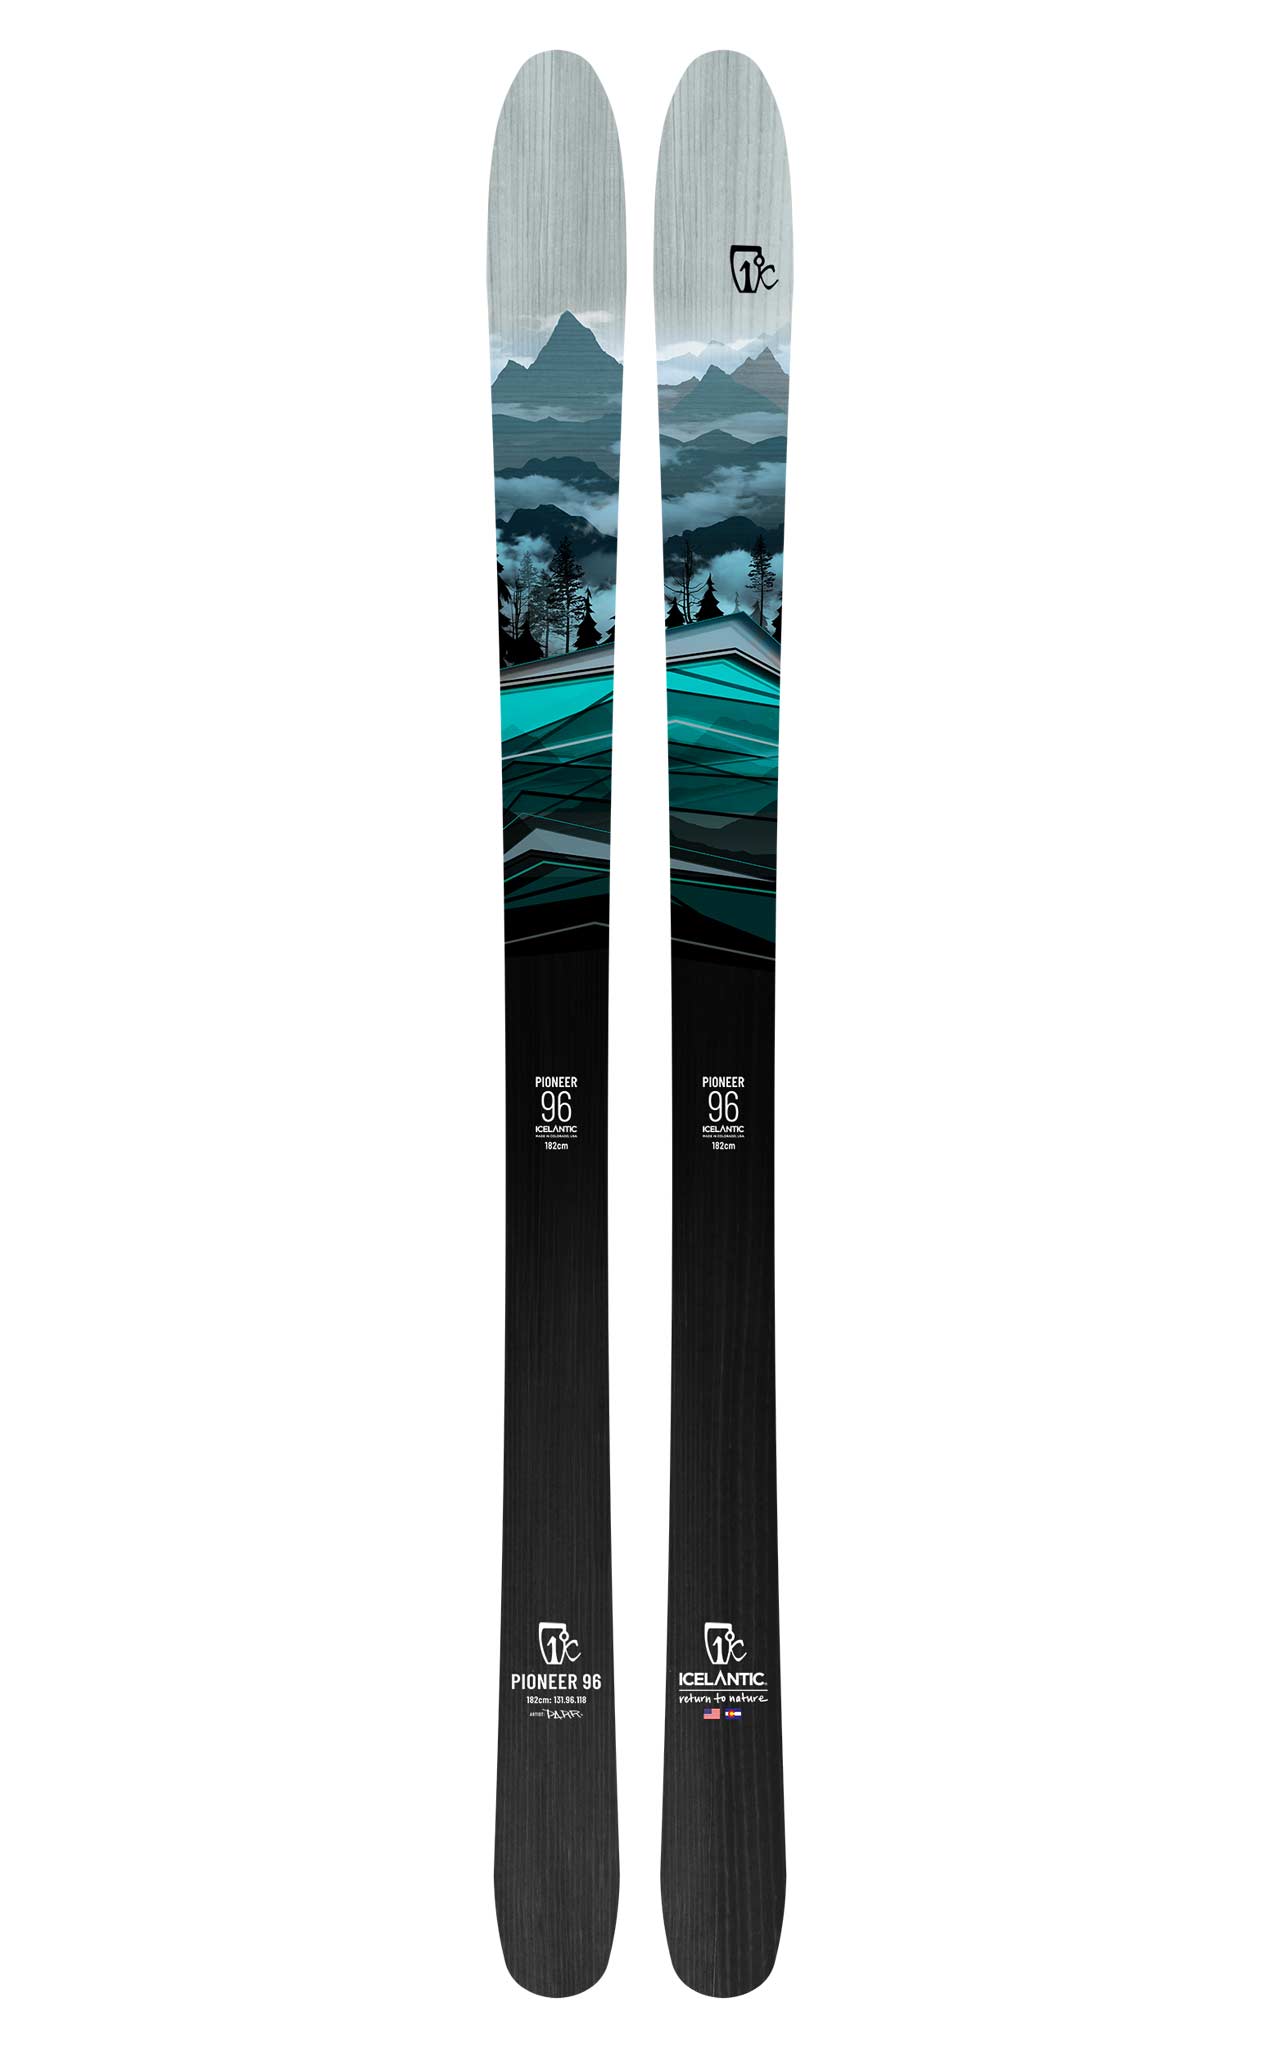 Лыжи для карвинга Icelantic Pioneer 96 2022/2023 182cm